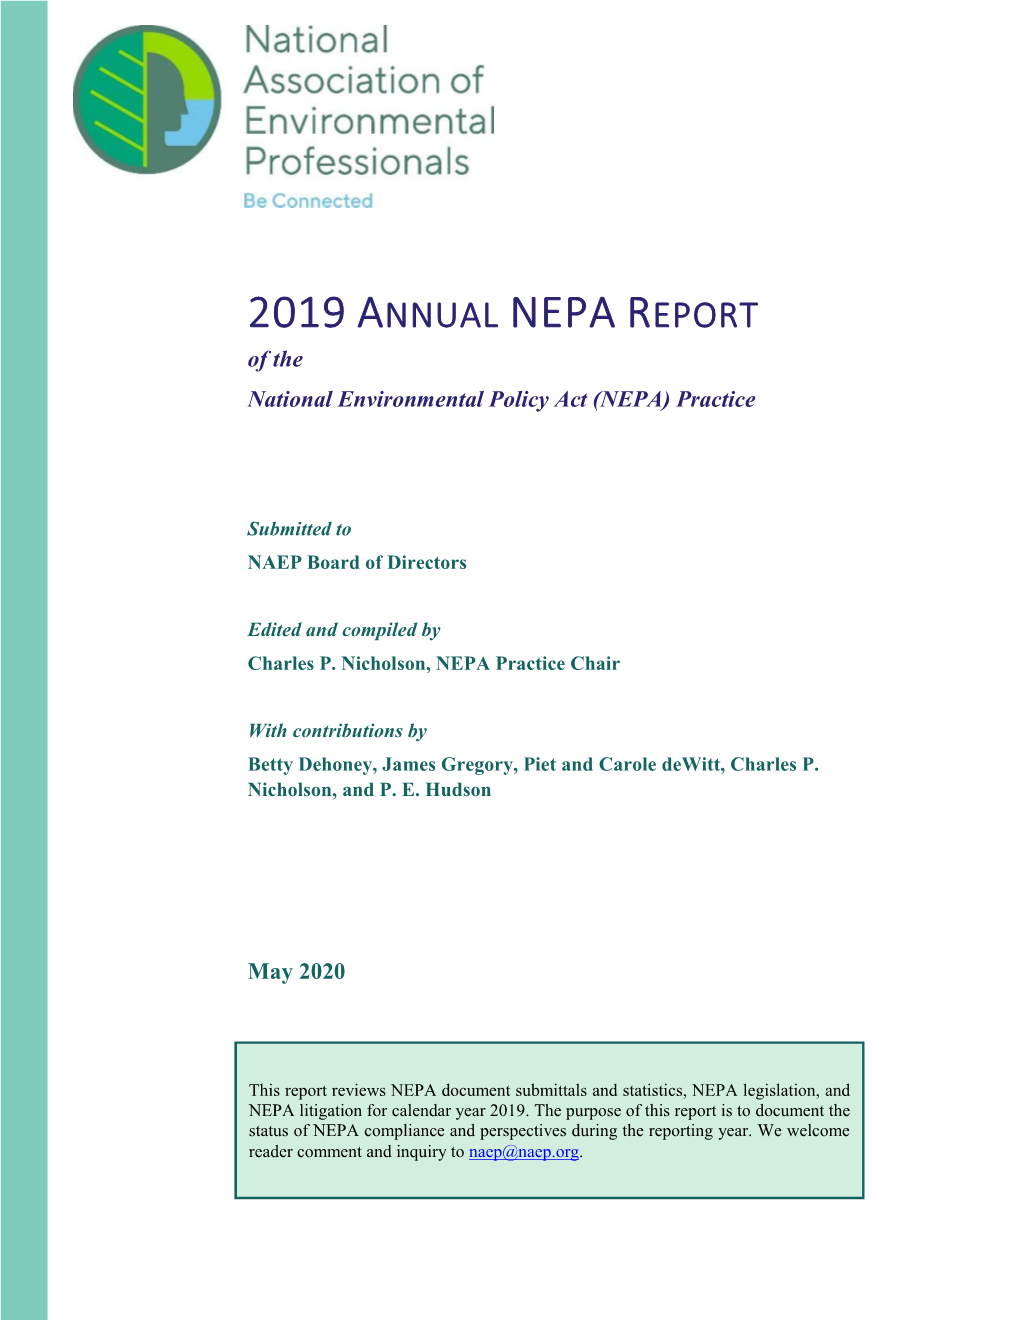 NEPA Annual Report 2019